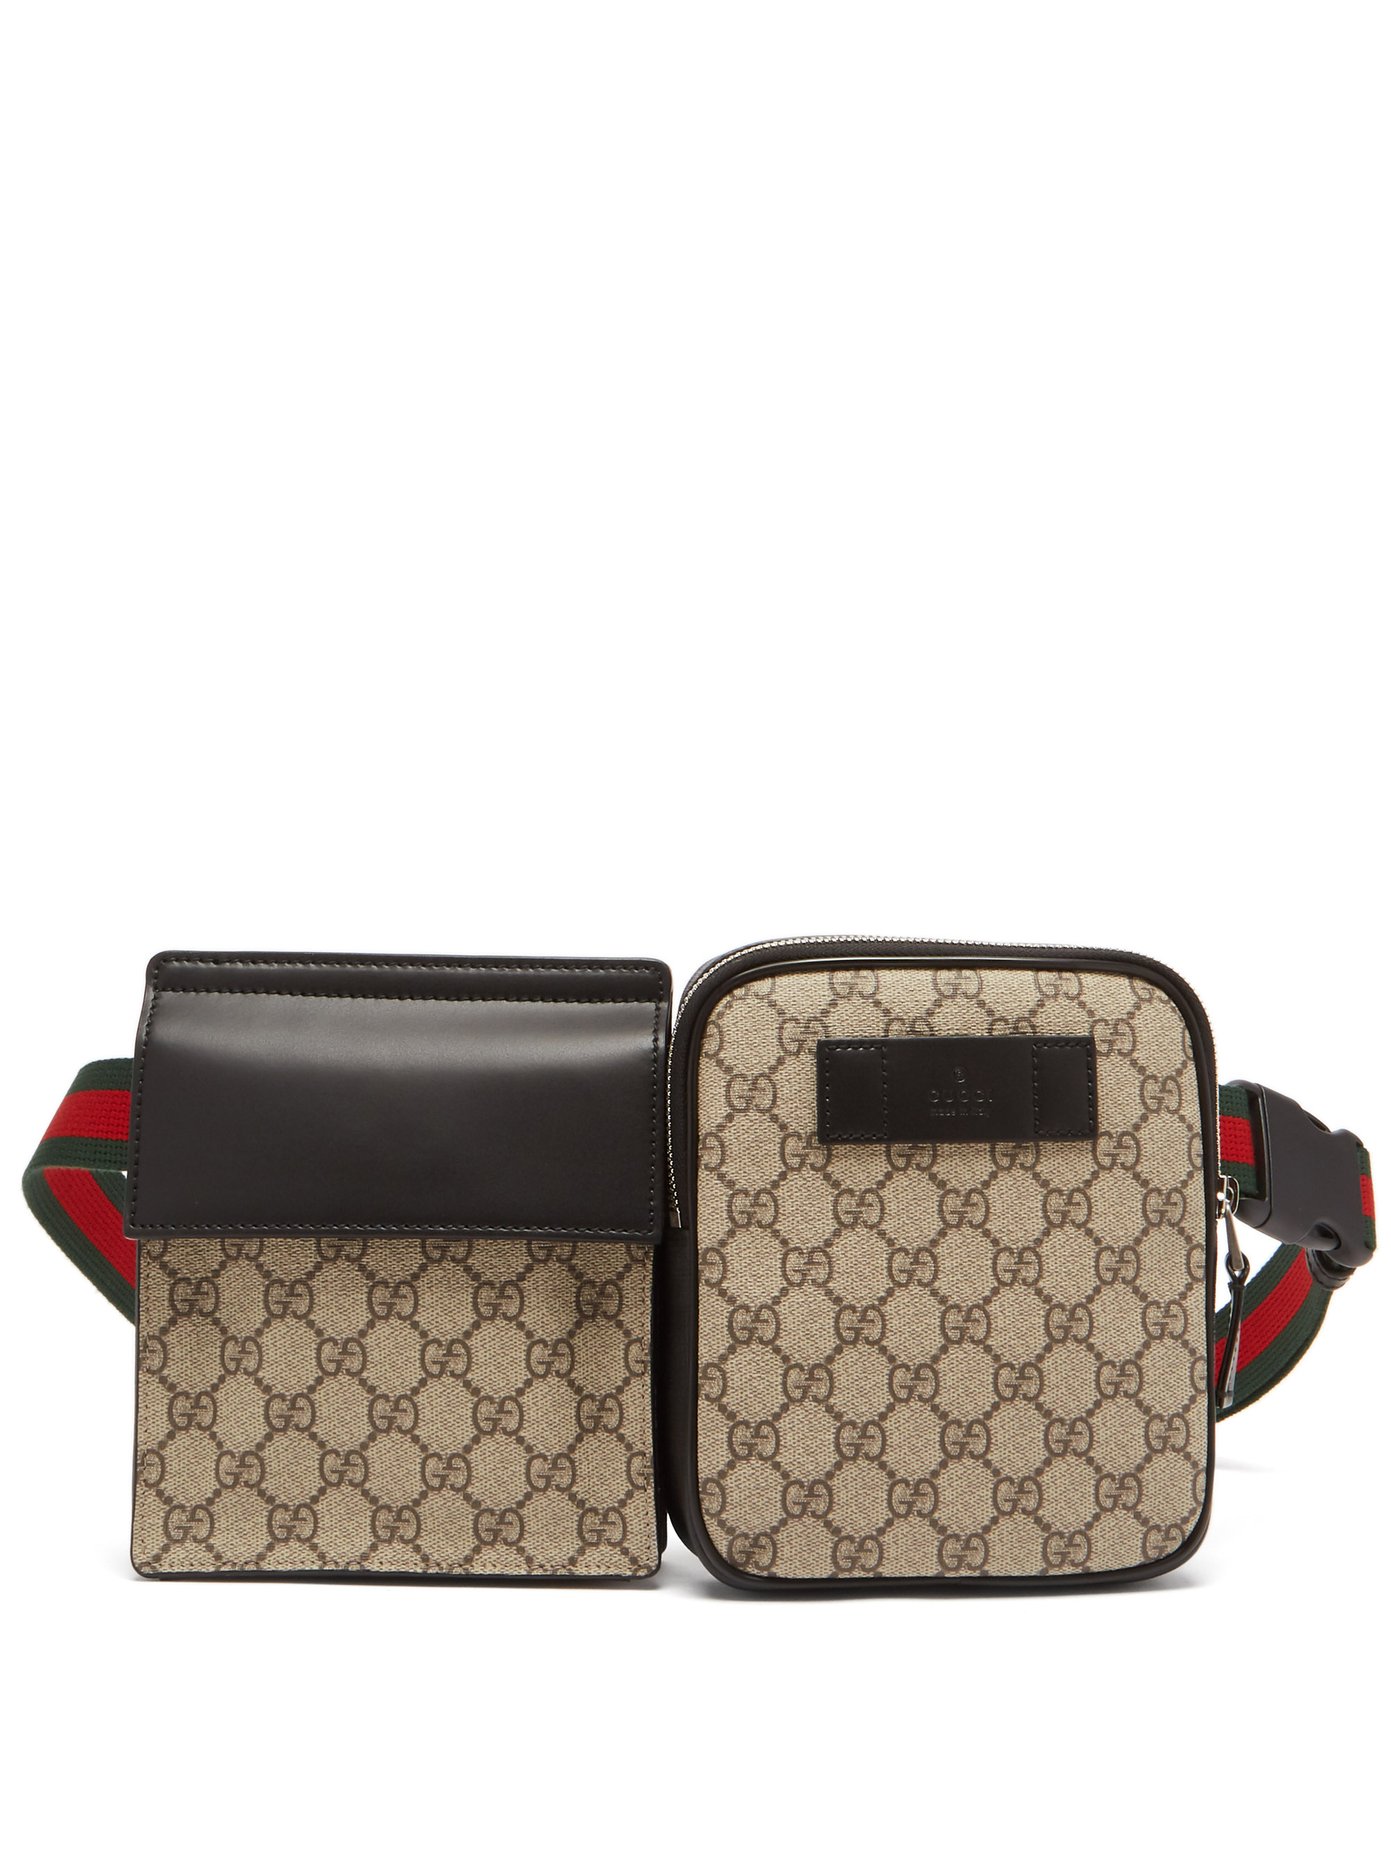 Gucci Supreme Belt Bag Top Sellers, 53% OFF | www.ingeniovirtual.com